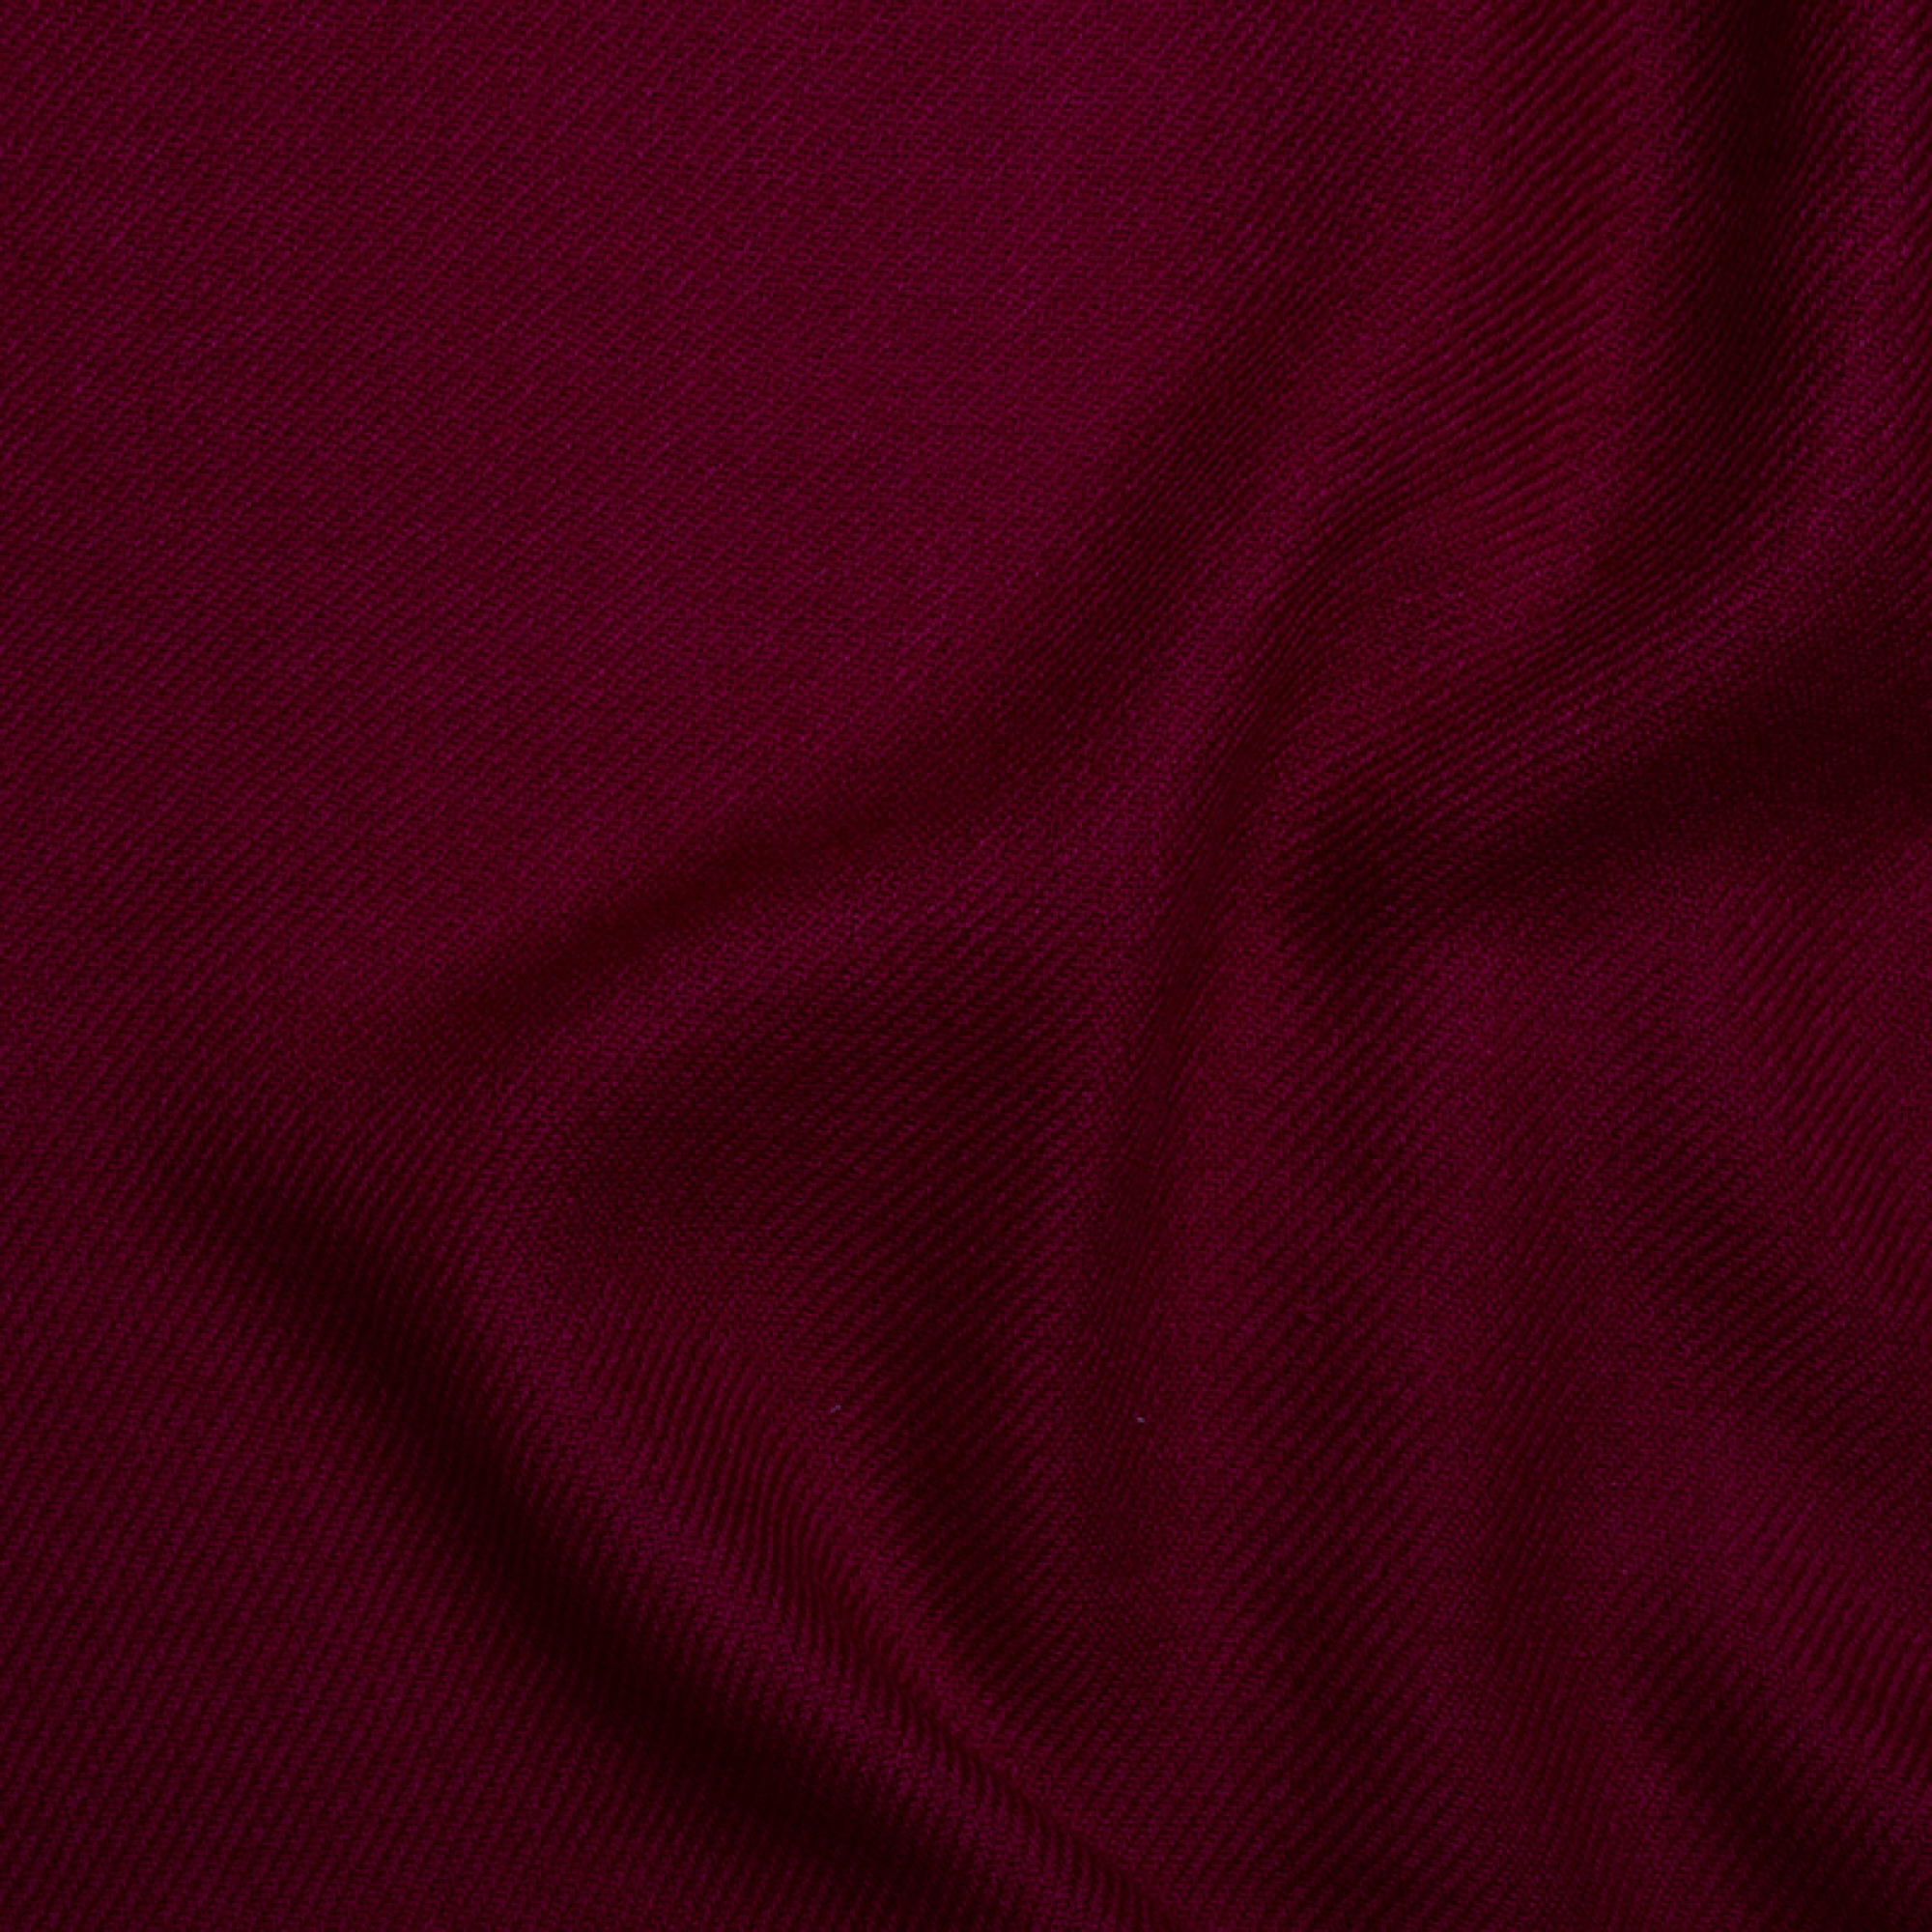 Cashmere accessories blanket frisbi 147 x 203 cerise 147 x 203 cm